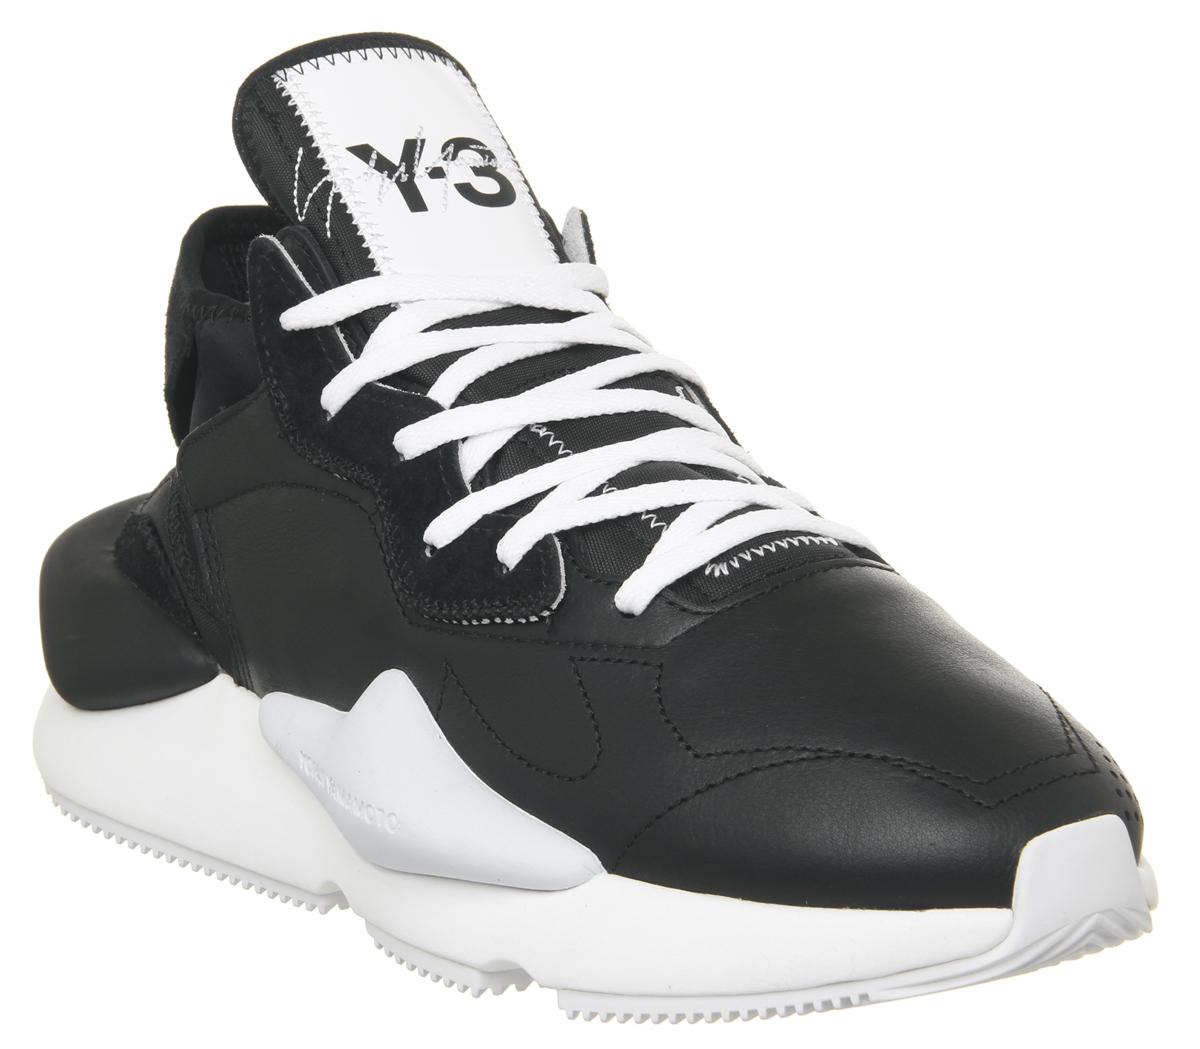 adidas Y3 Y-3 Kawa Trainers Black White Leather - Unisex Sports